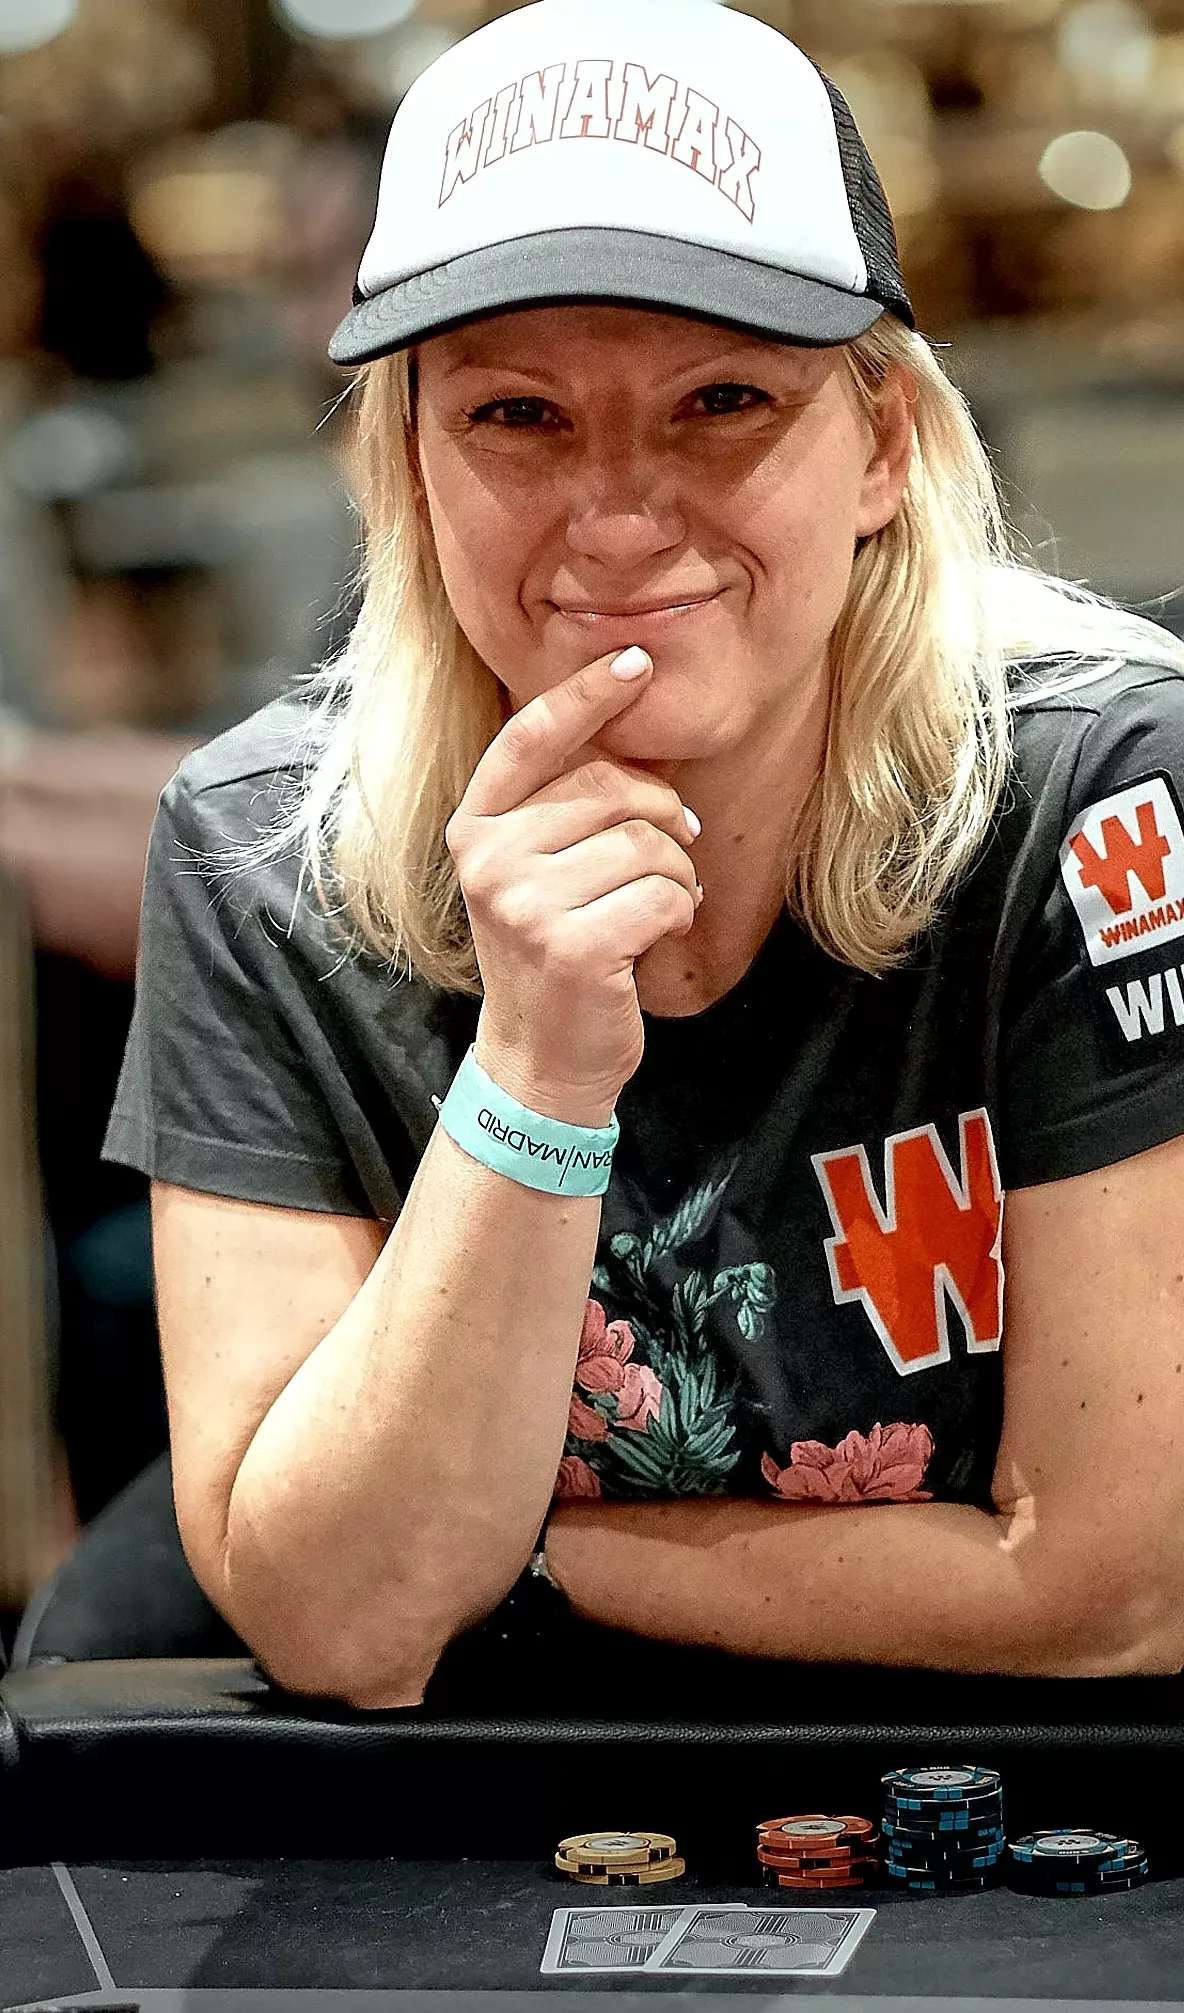 Olga Alexandrova, en el Winamax Poker Tour, en Torrelodones